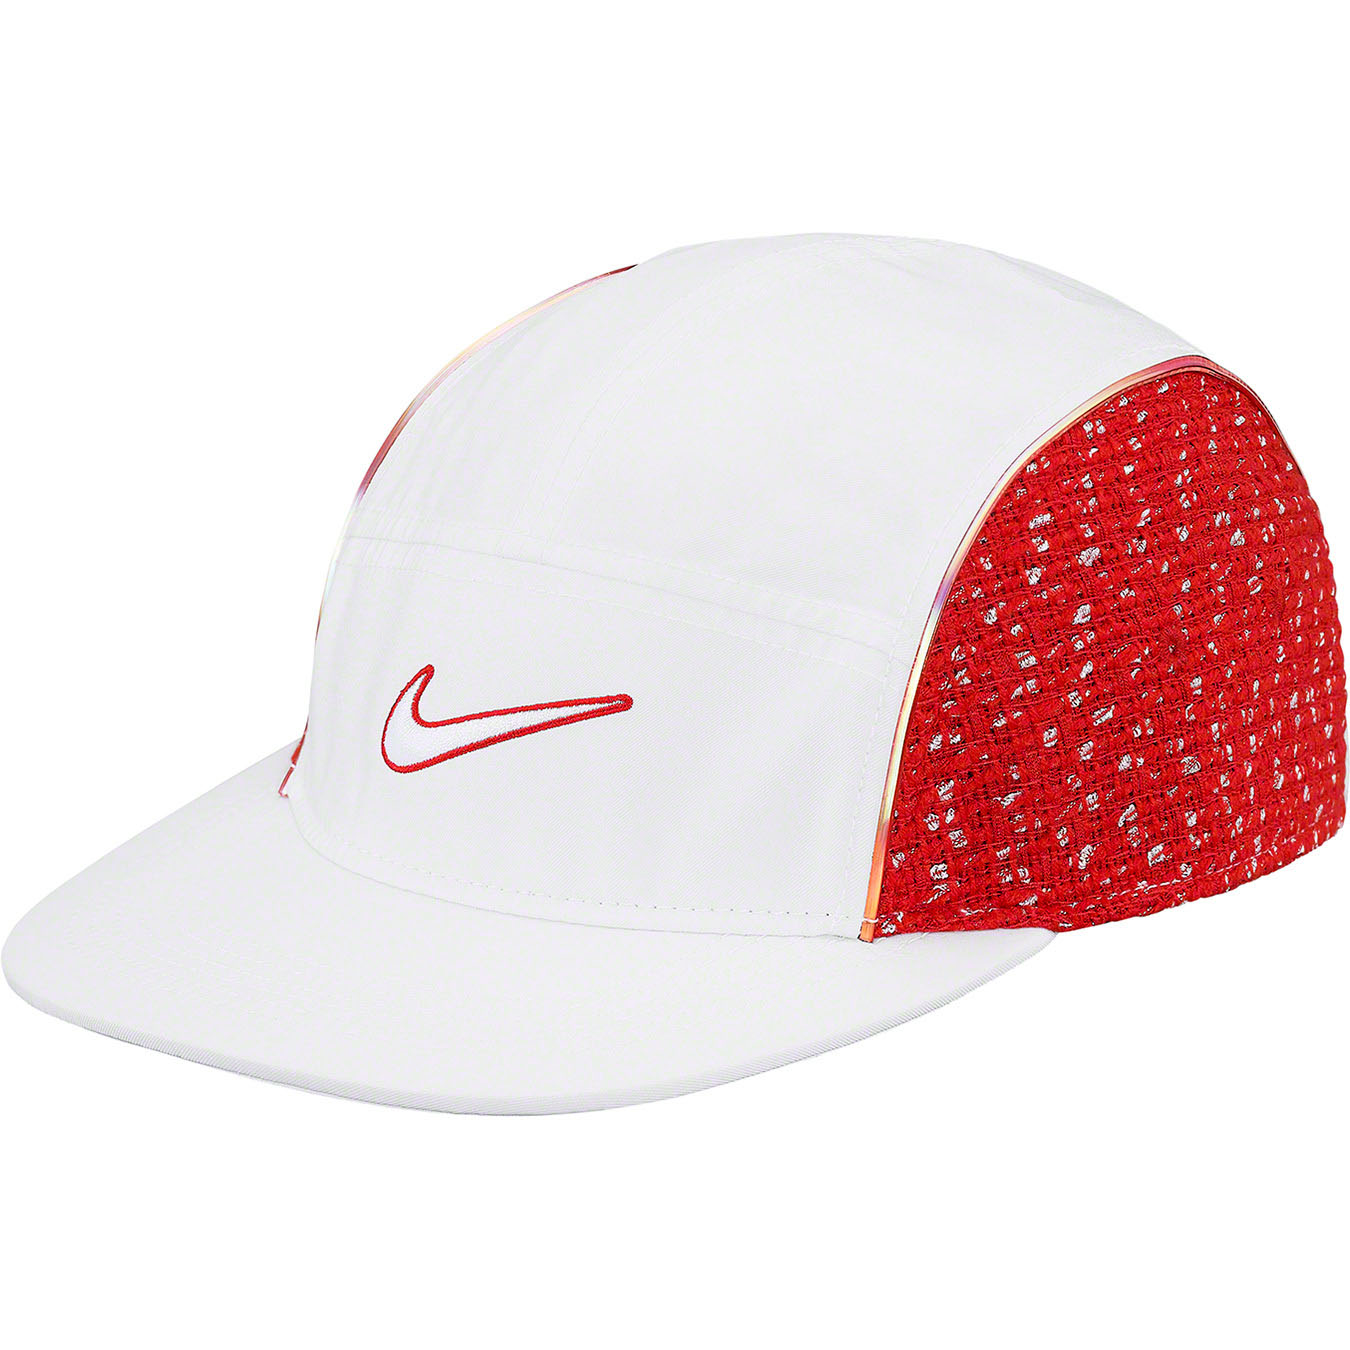 Supreme®/Nike® Bouclé Running Hat | Supreme 19ss